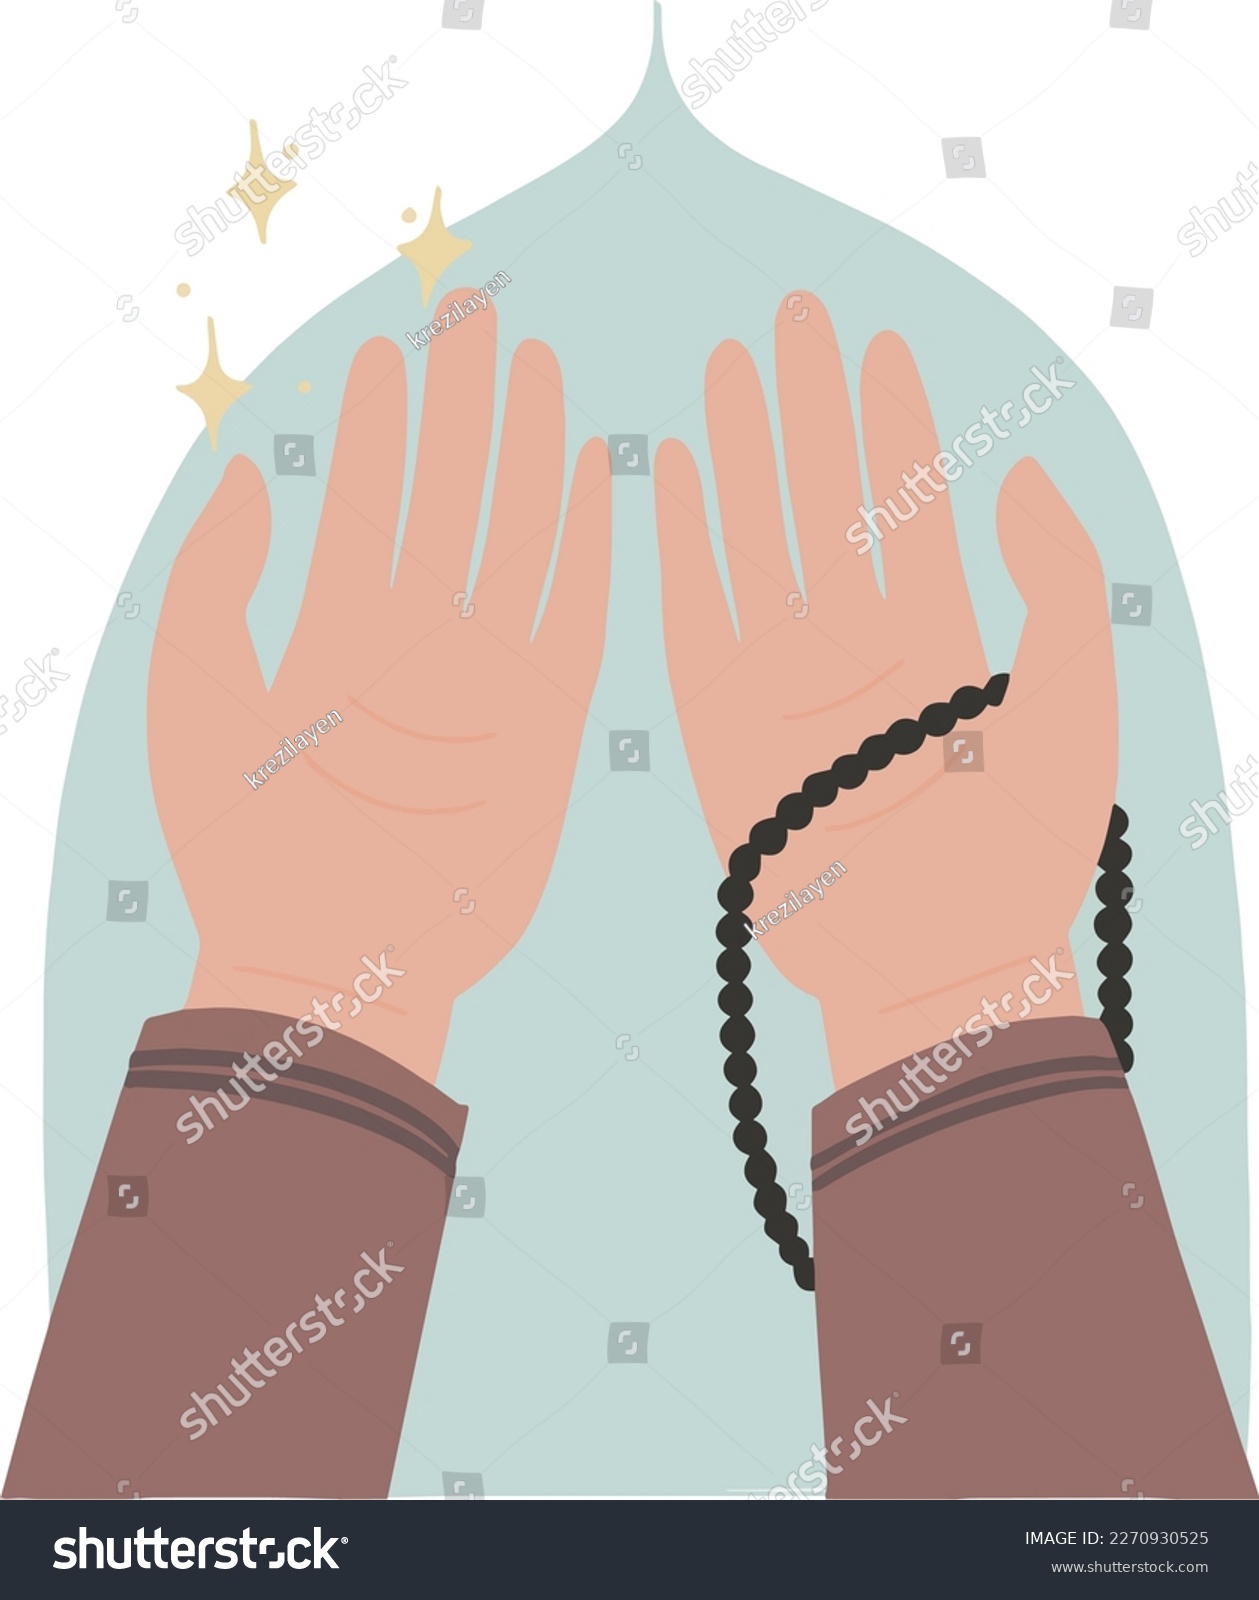 SVG of New ramadan kareem ied fitr moslem prayer hand drawn with tasbih dua prayer beads and mosque background aesthetic illustration svg